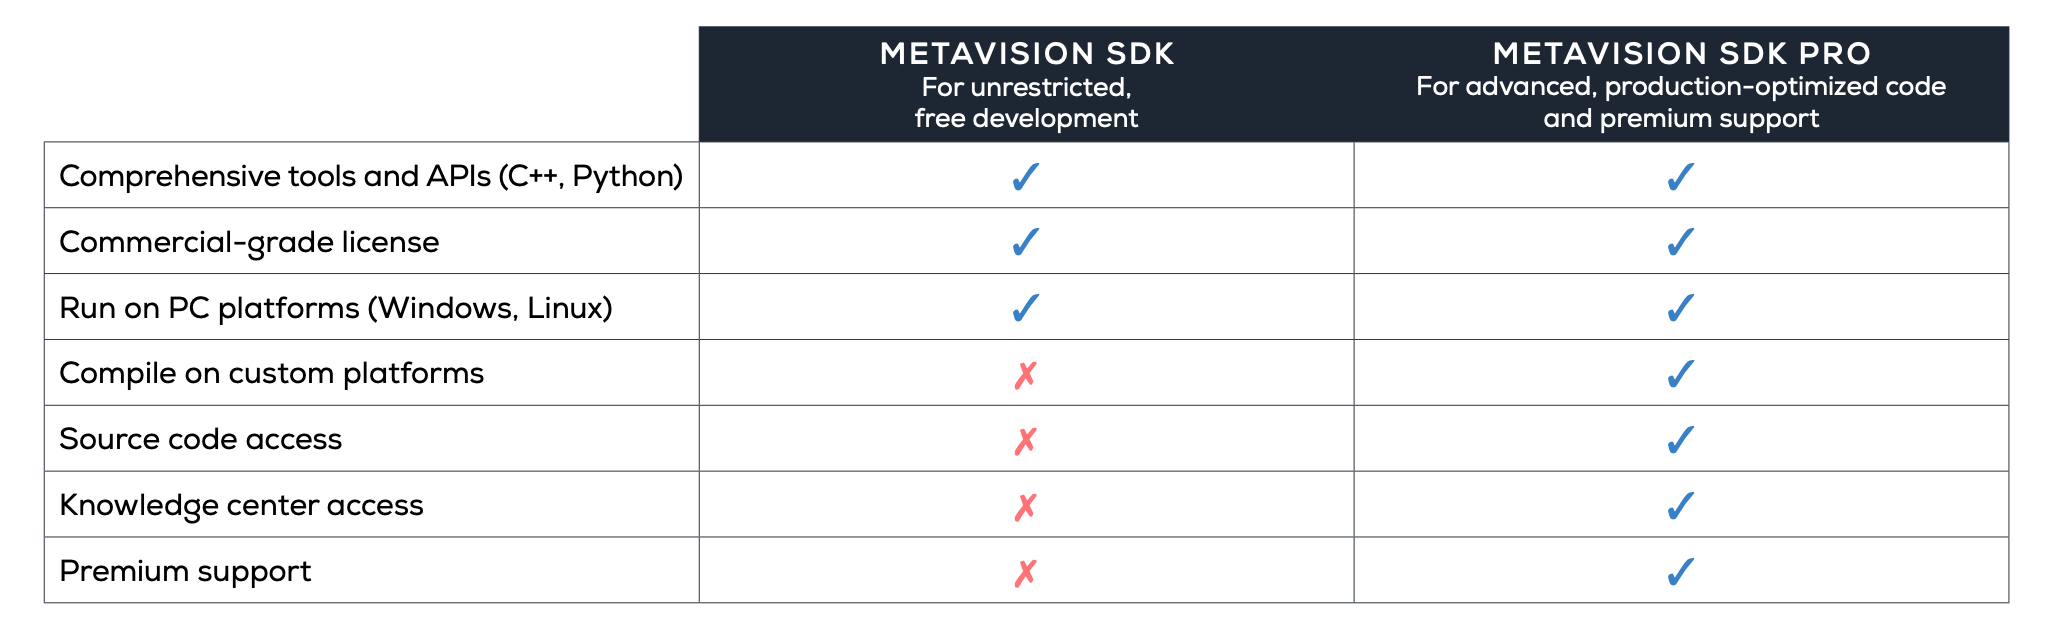 Metavision SDK Offers